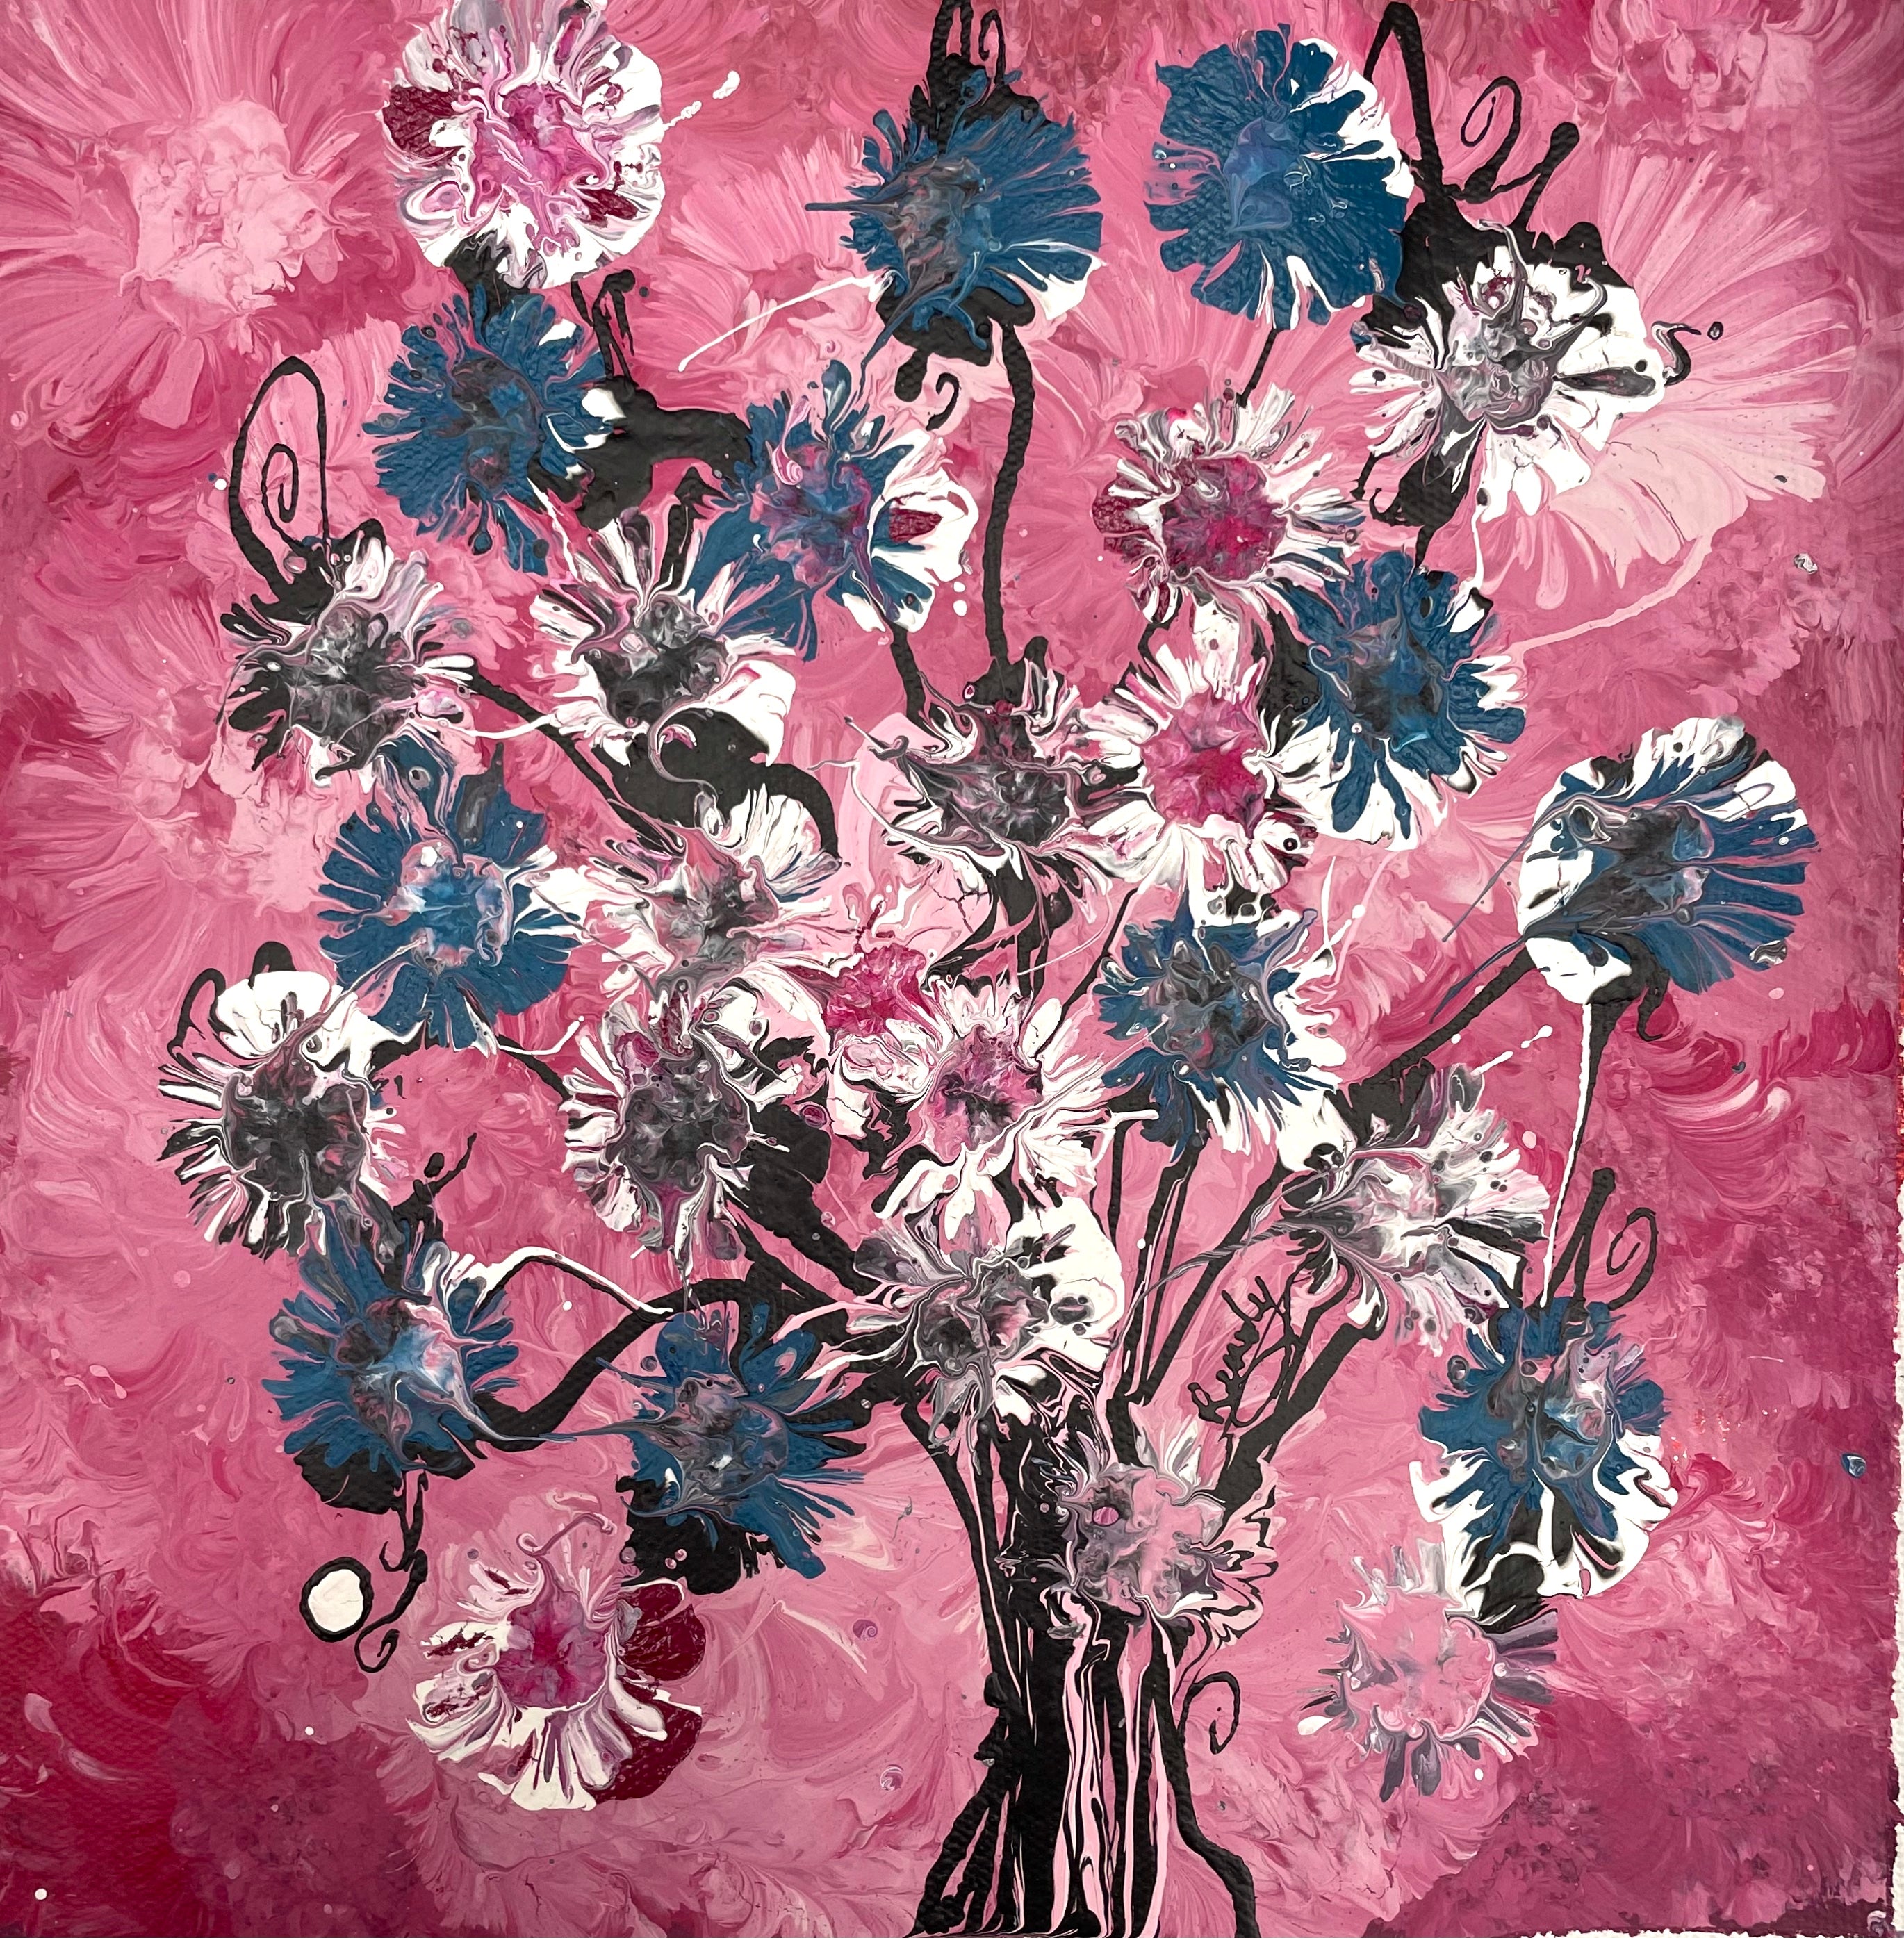 'Wild Flowers' | 30x30cm